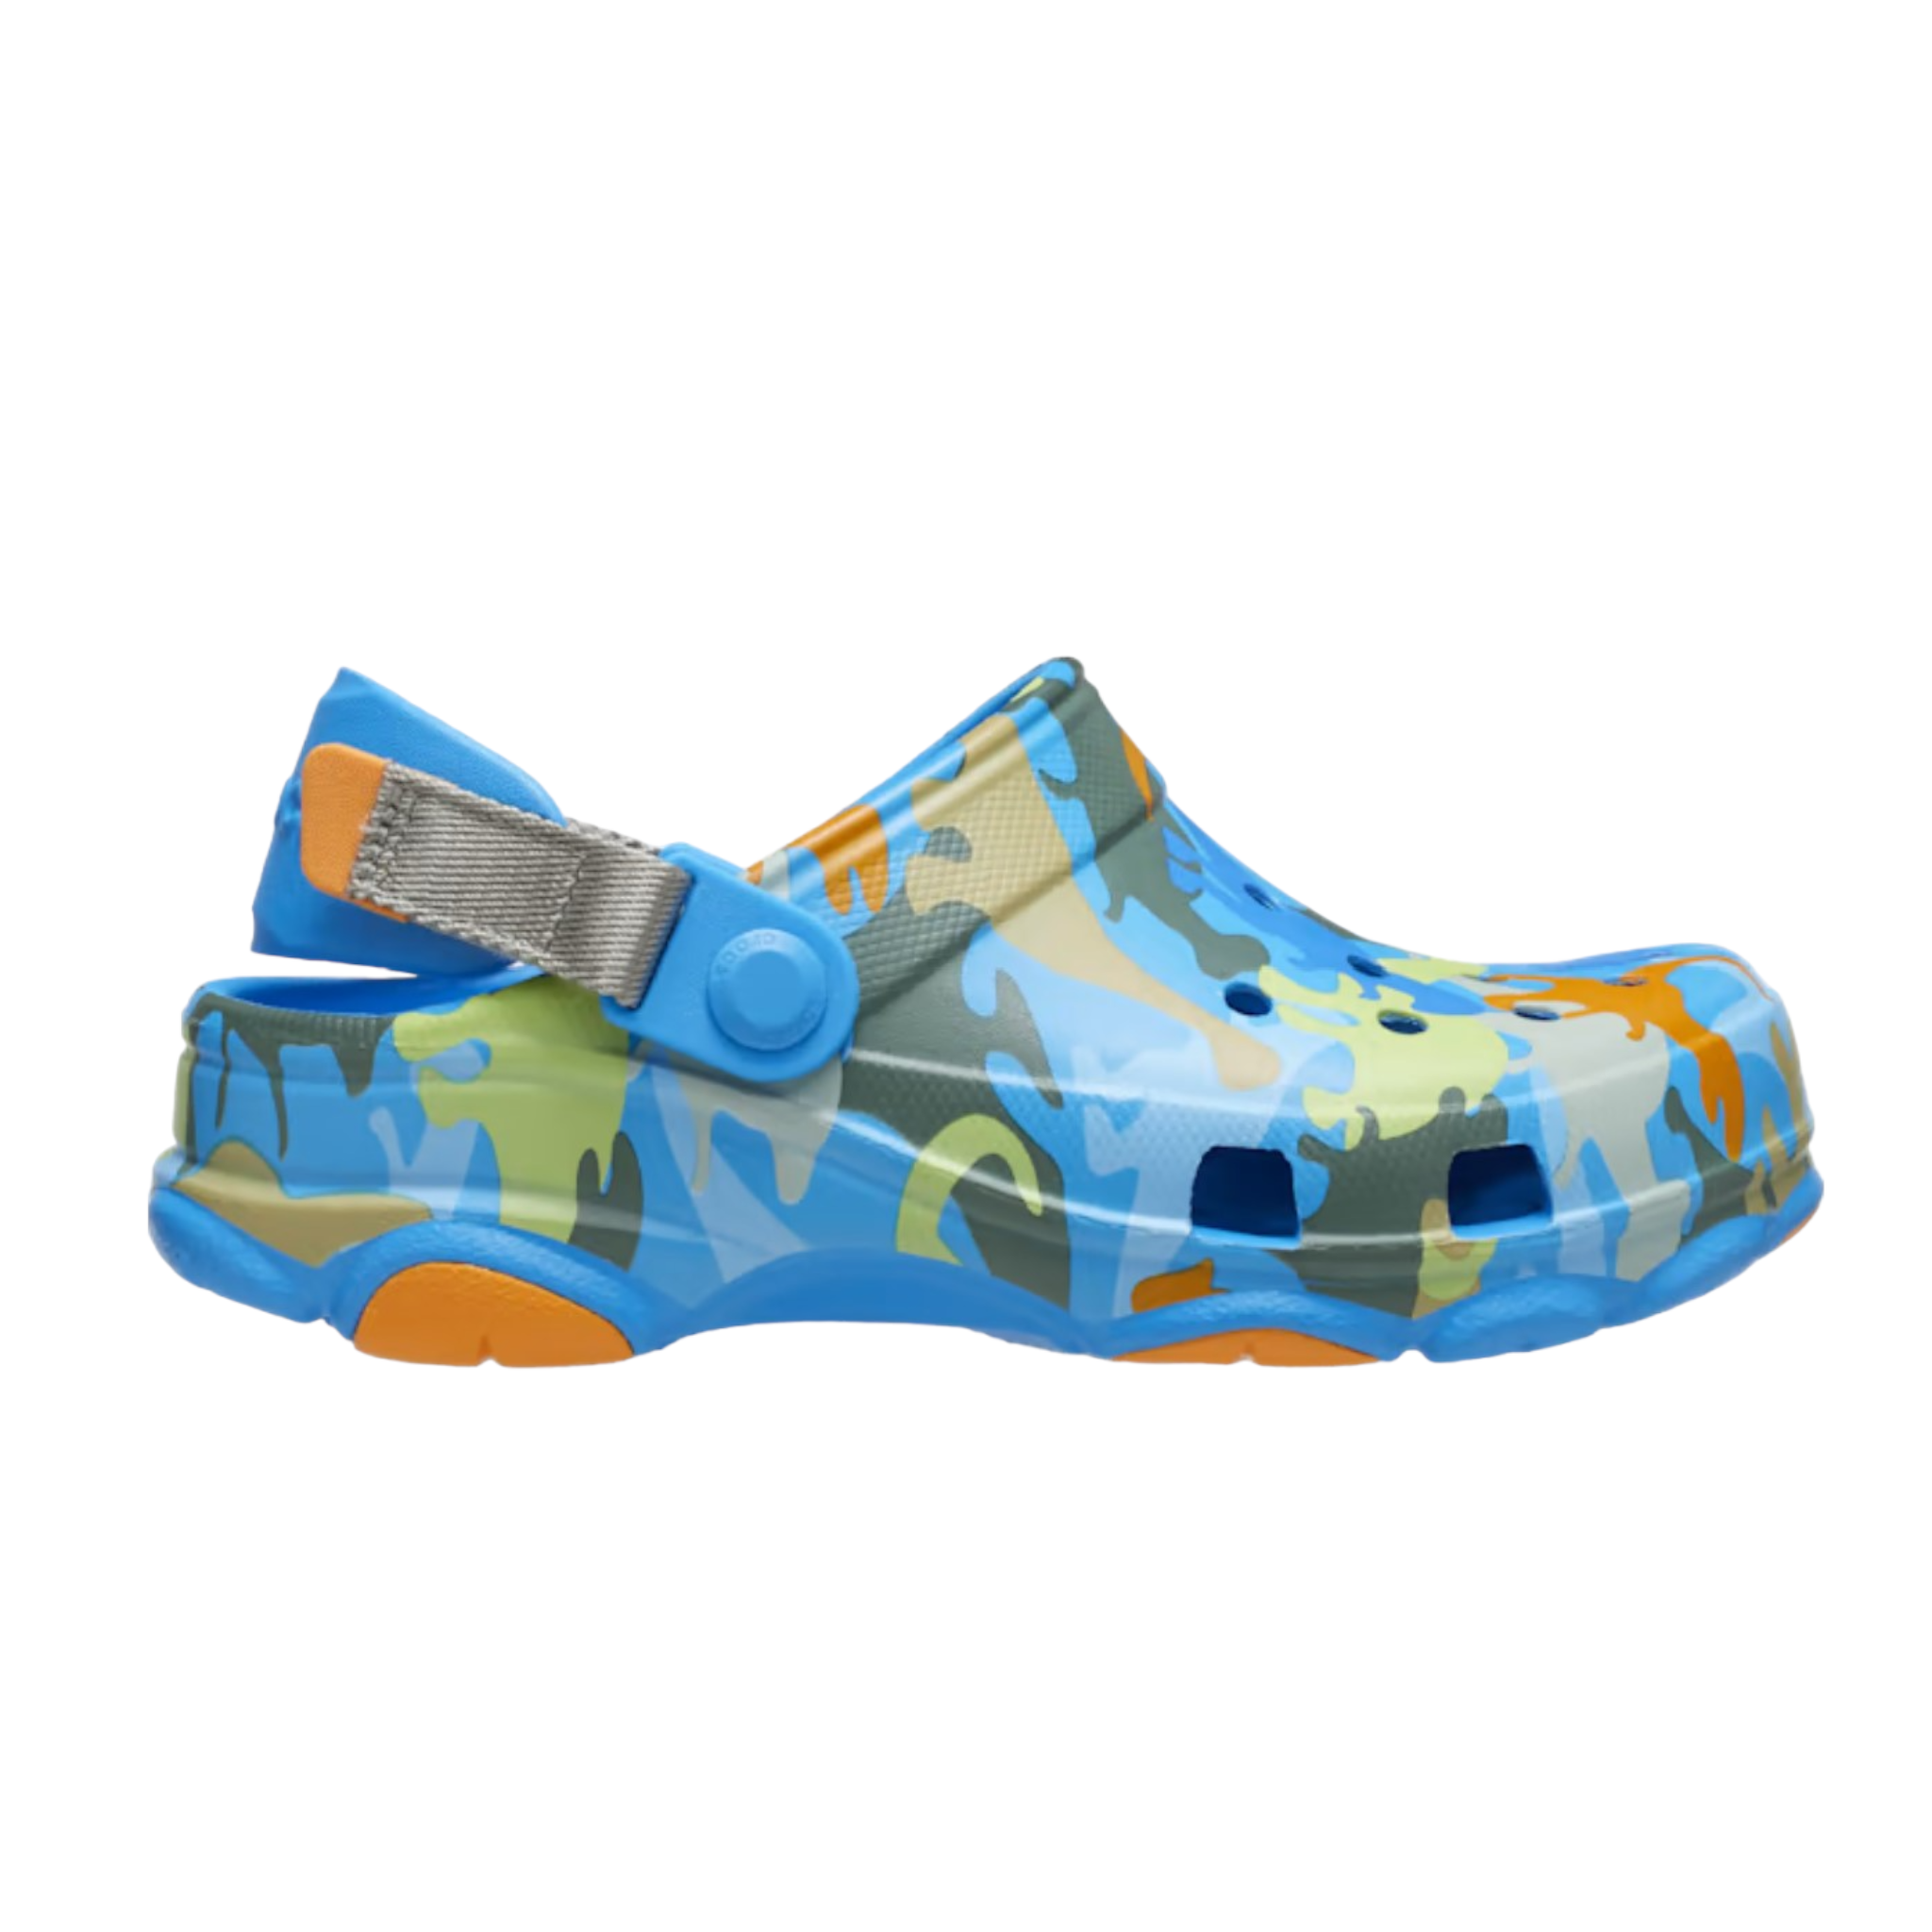 All-Terrain Dino Camo Clog Toddlers - shoe&amp;me - Crocs - Clog - Clogs, Kids, Summer, Winter